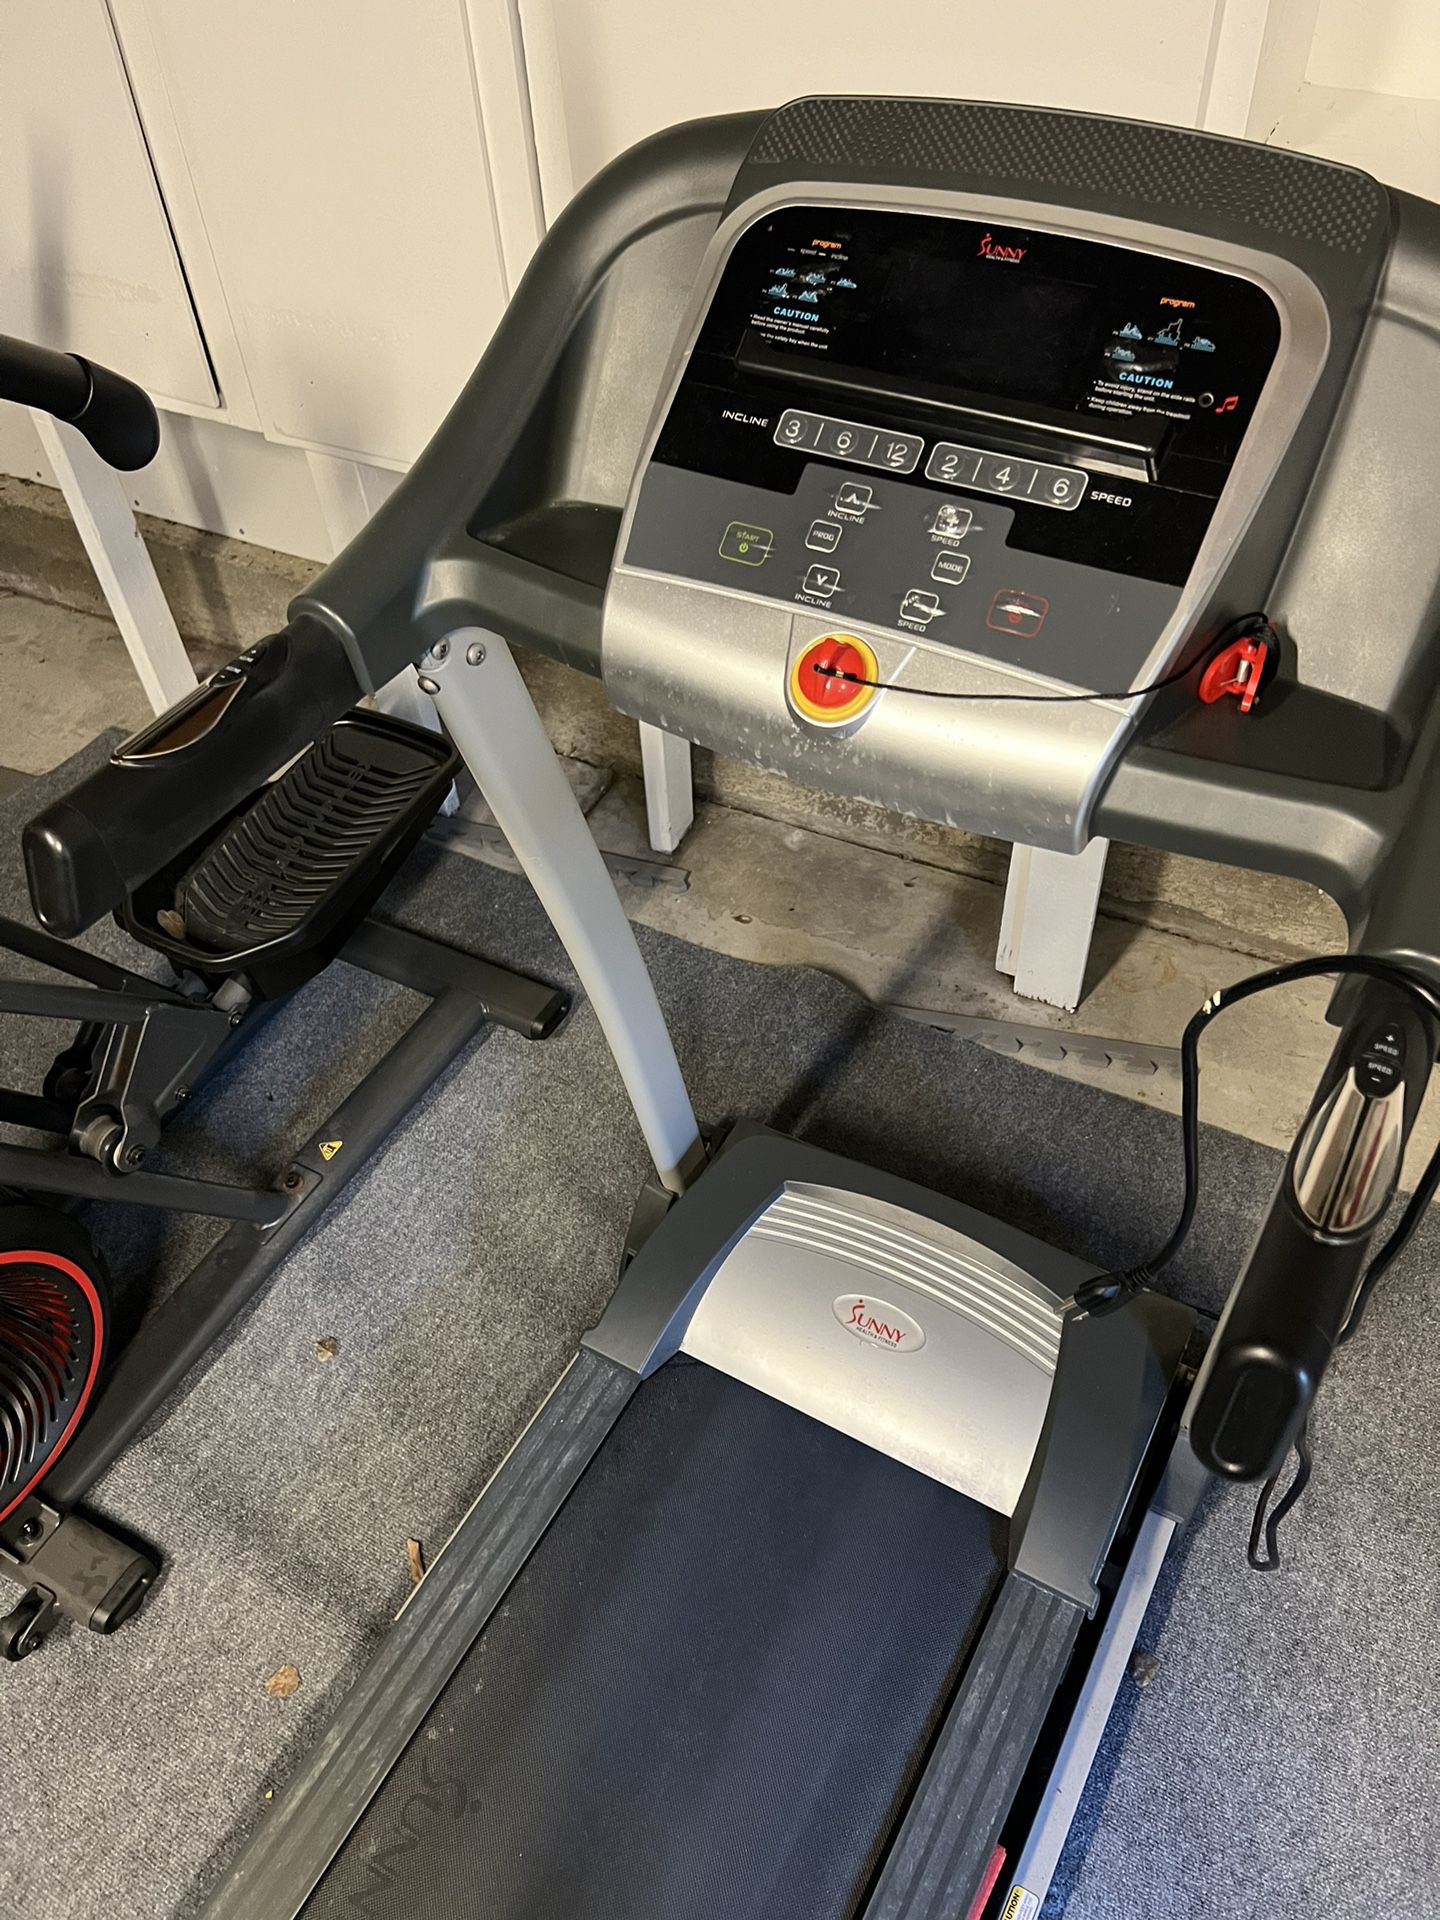 Sunny Health & Fitness Portable Treadmill with Auto Incline